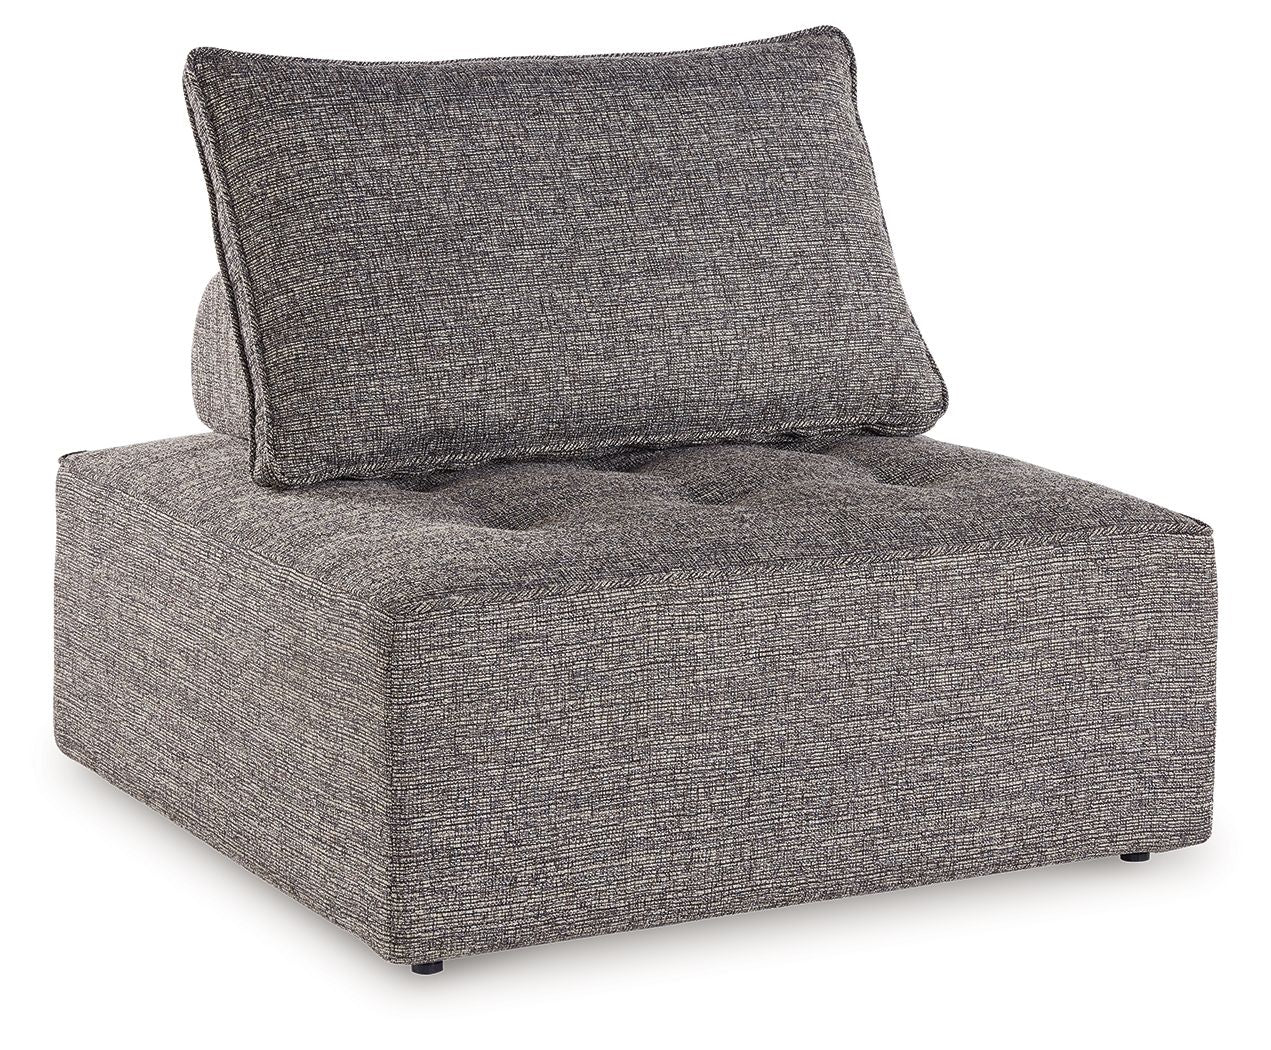 Bree Zee - Lounge Chair With Cushion - Tony's Home Furnishings